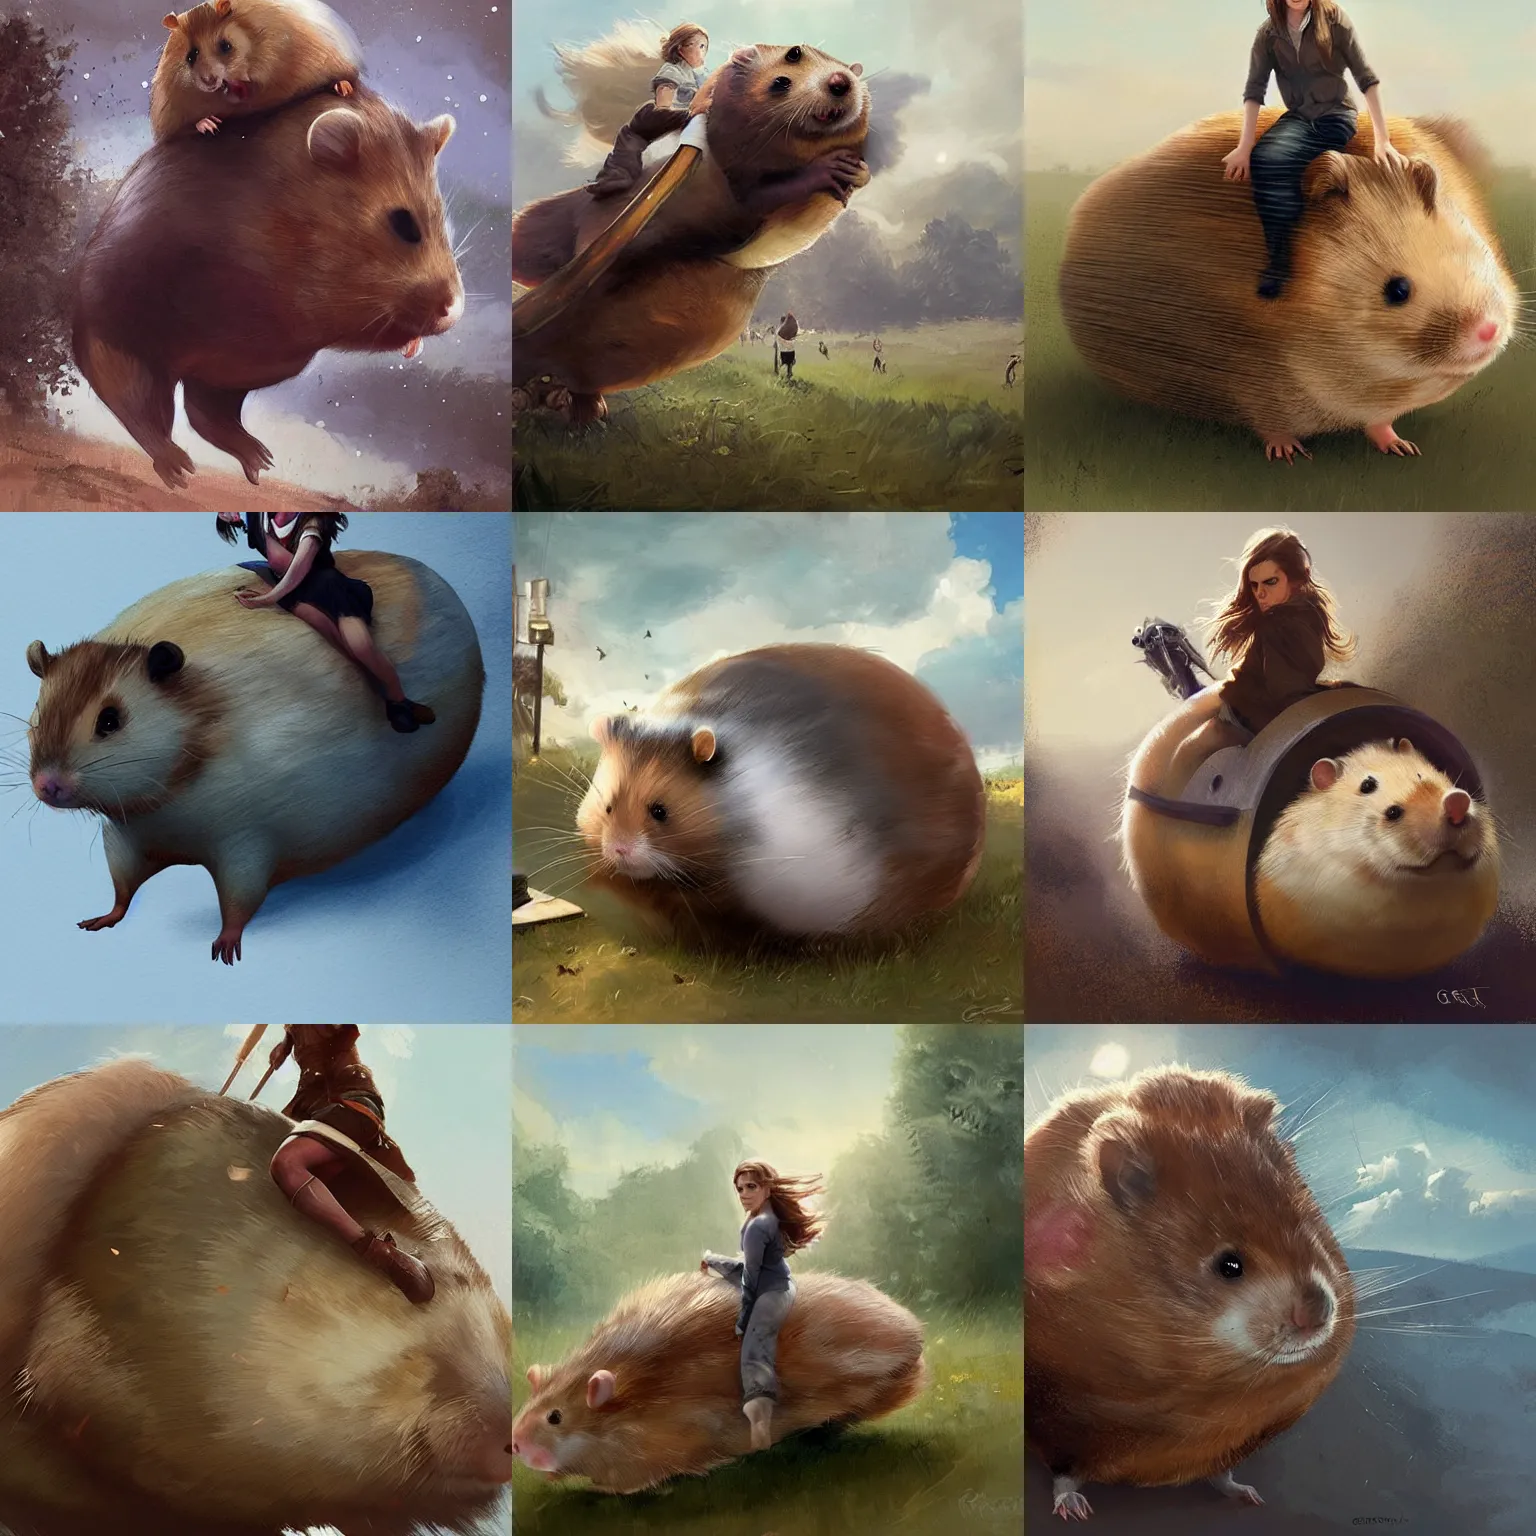 Prompt: emma watson rides a giant hamster, digital art by greg rutkowski